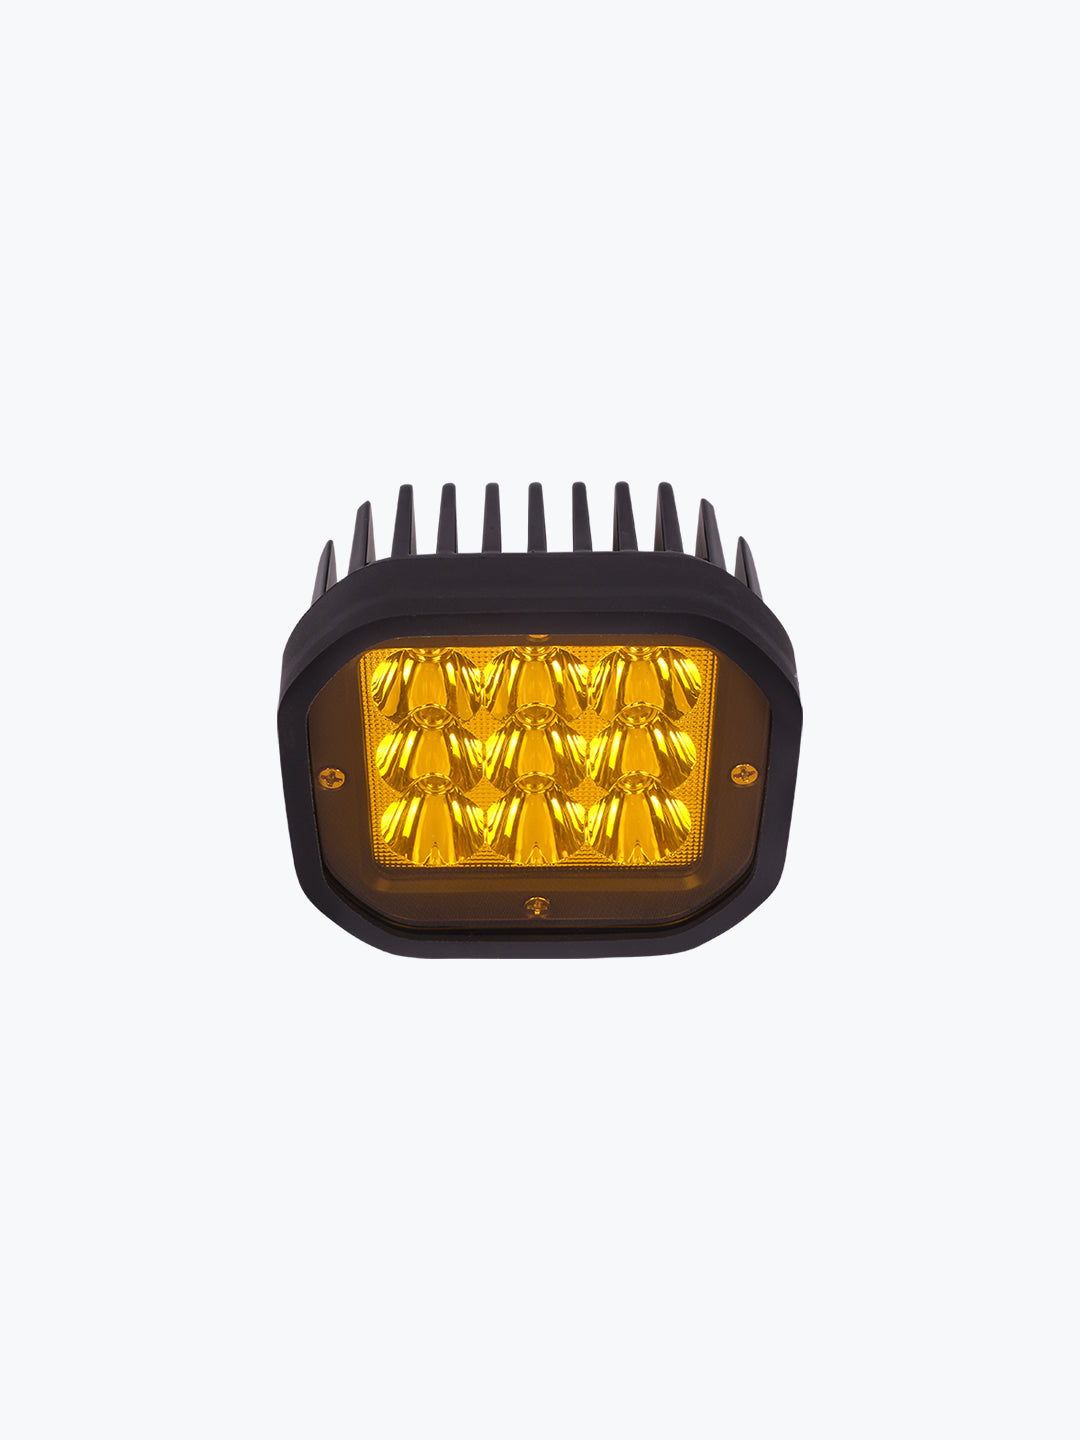 HJG 9 LED Fog Light With Yellow Cap Premium